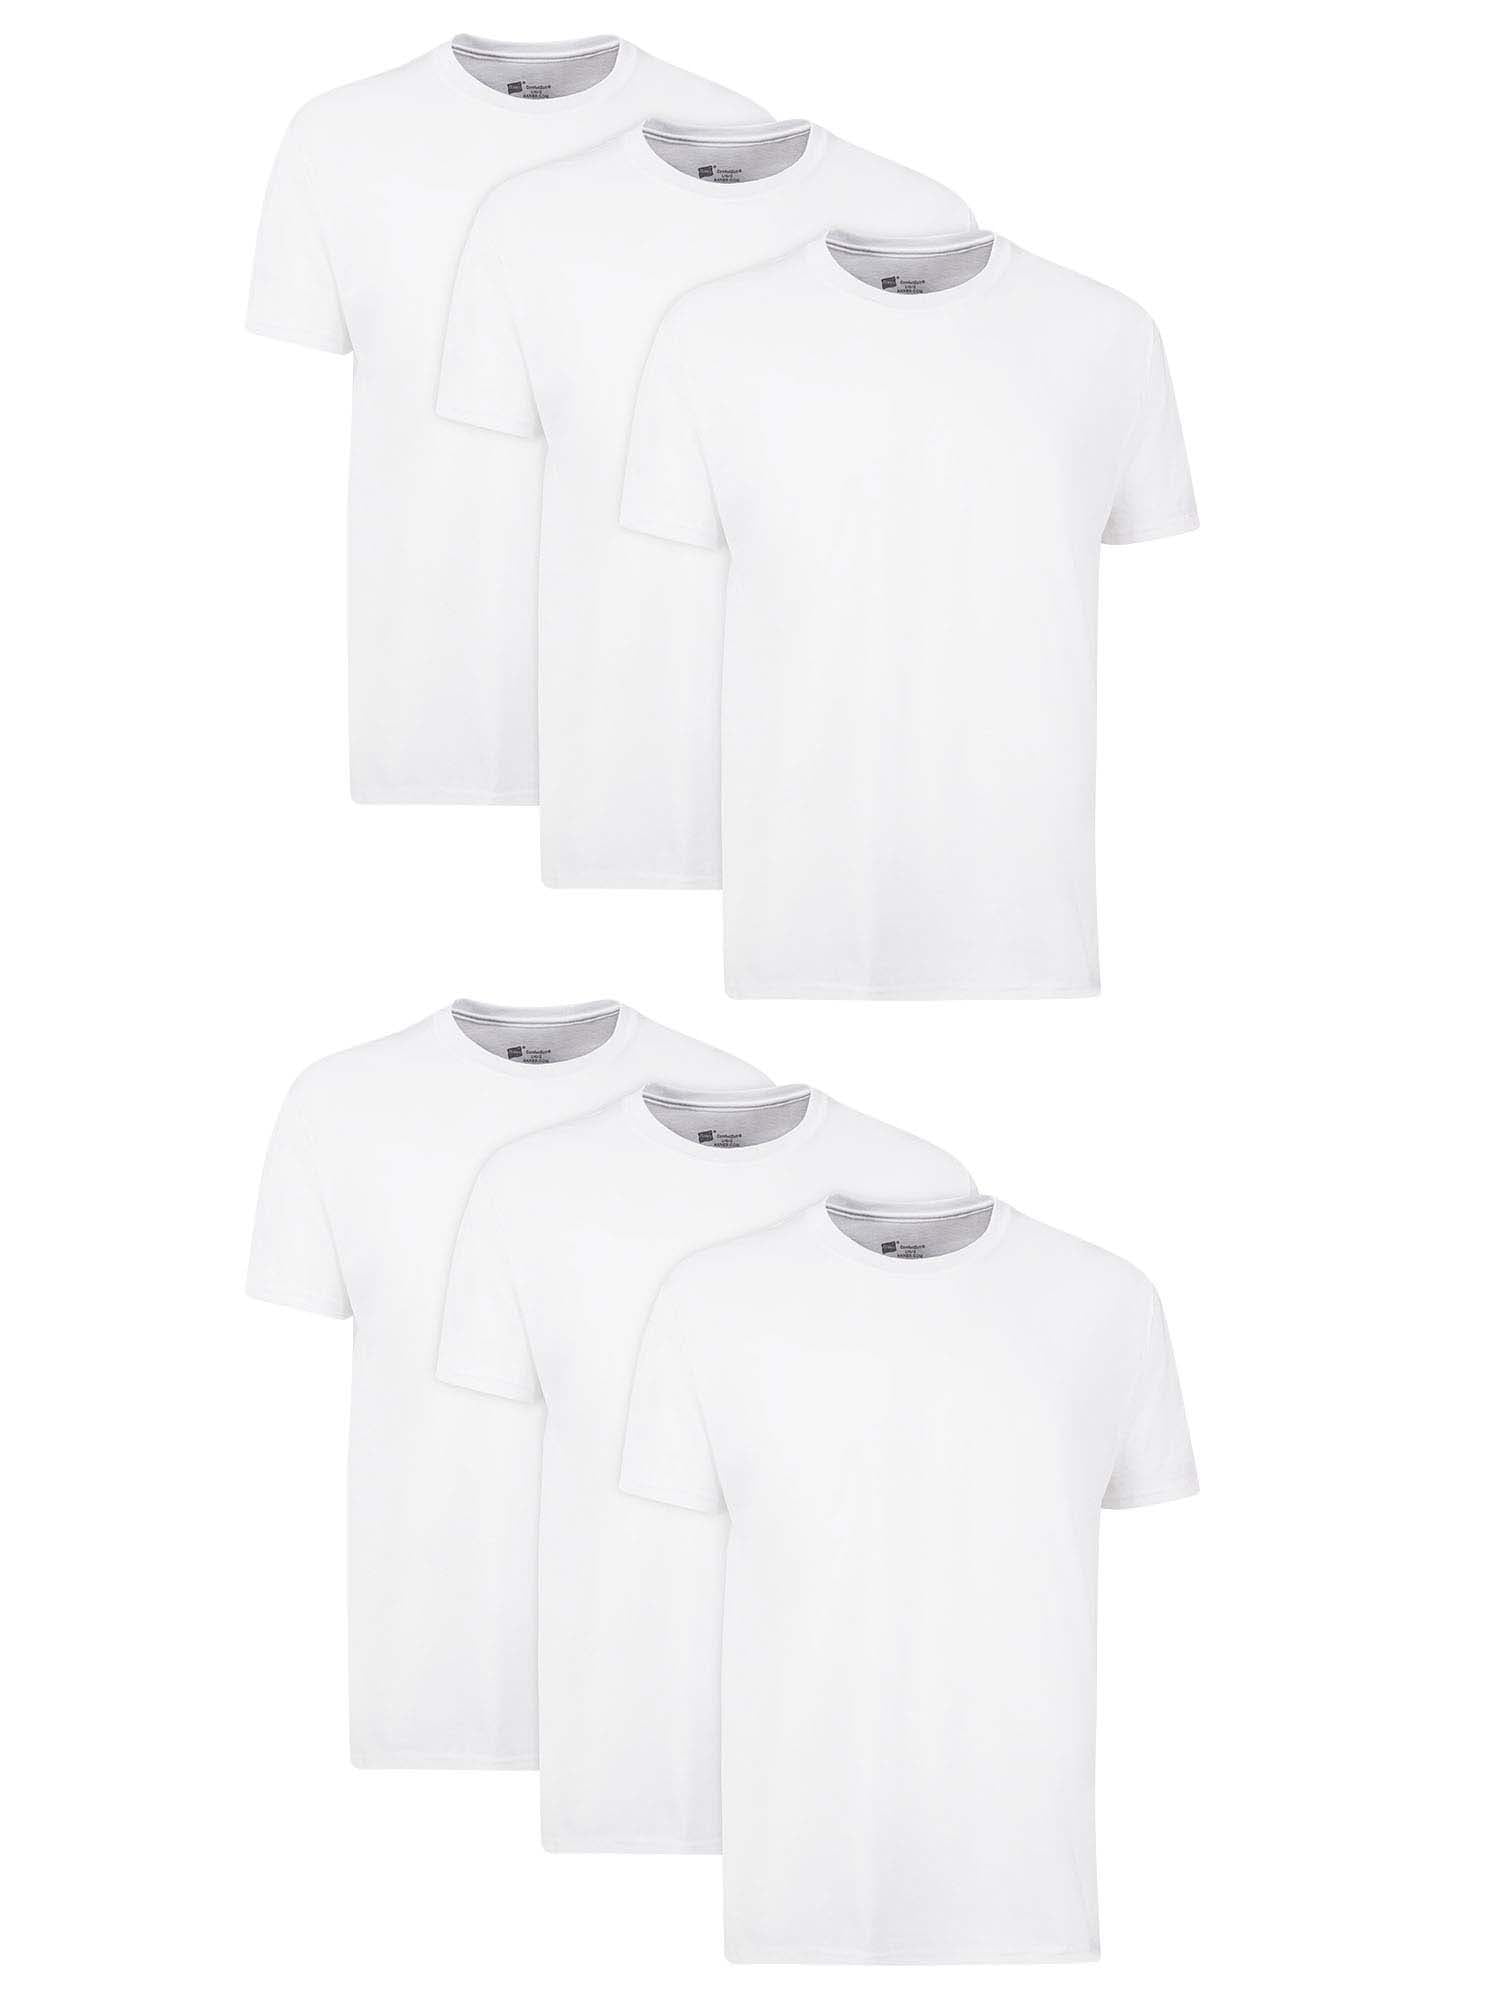 Men's Hugo Boss T-Shirt White Blue Fashion Crew Neck Size S 